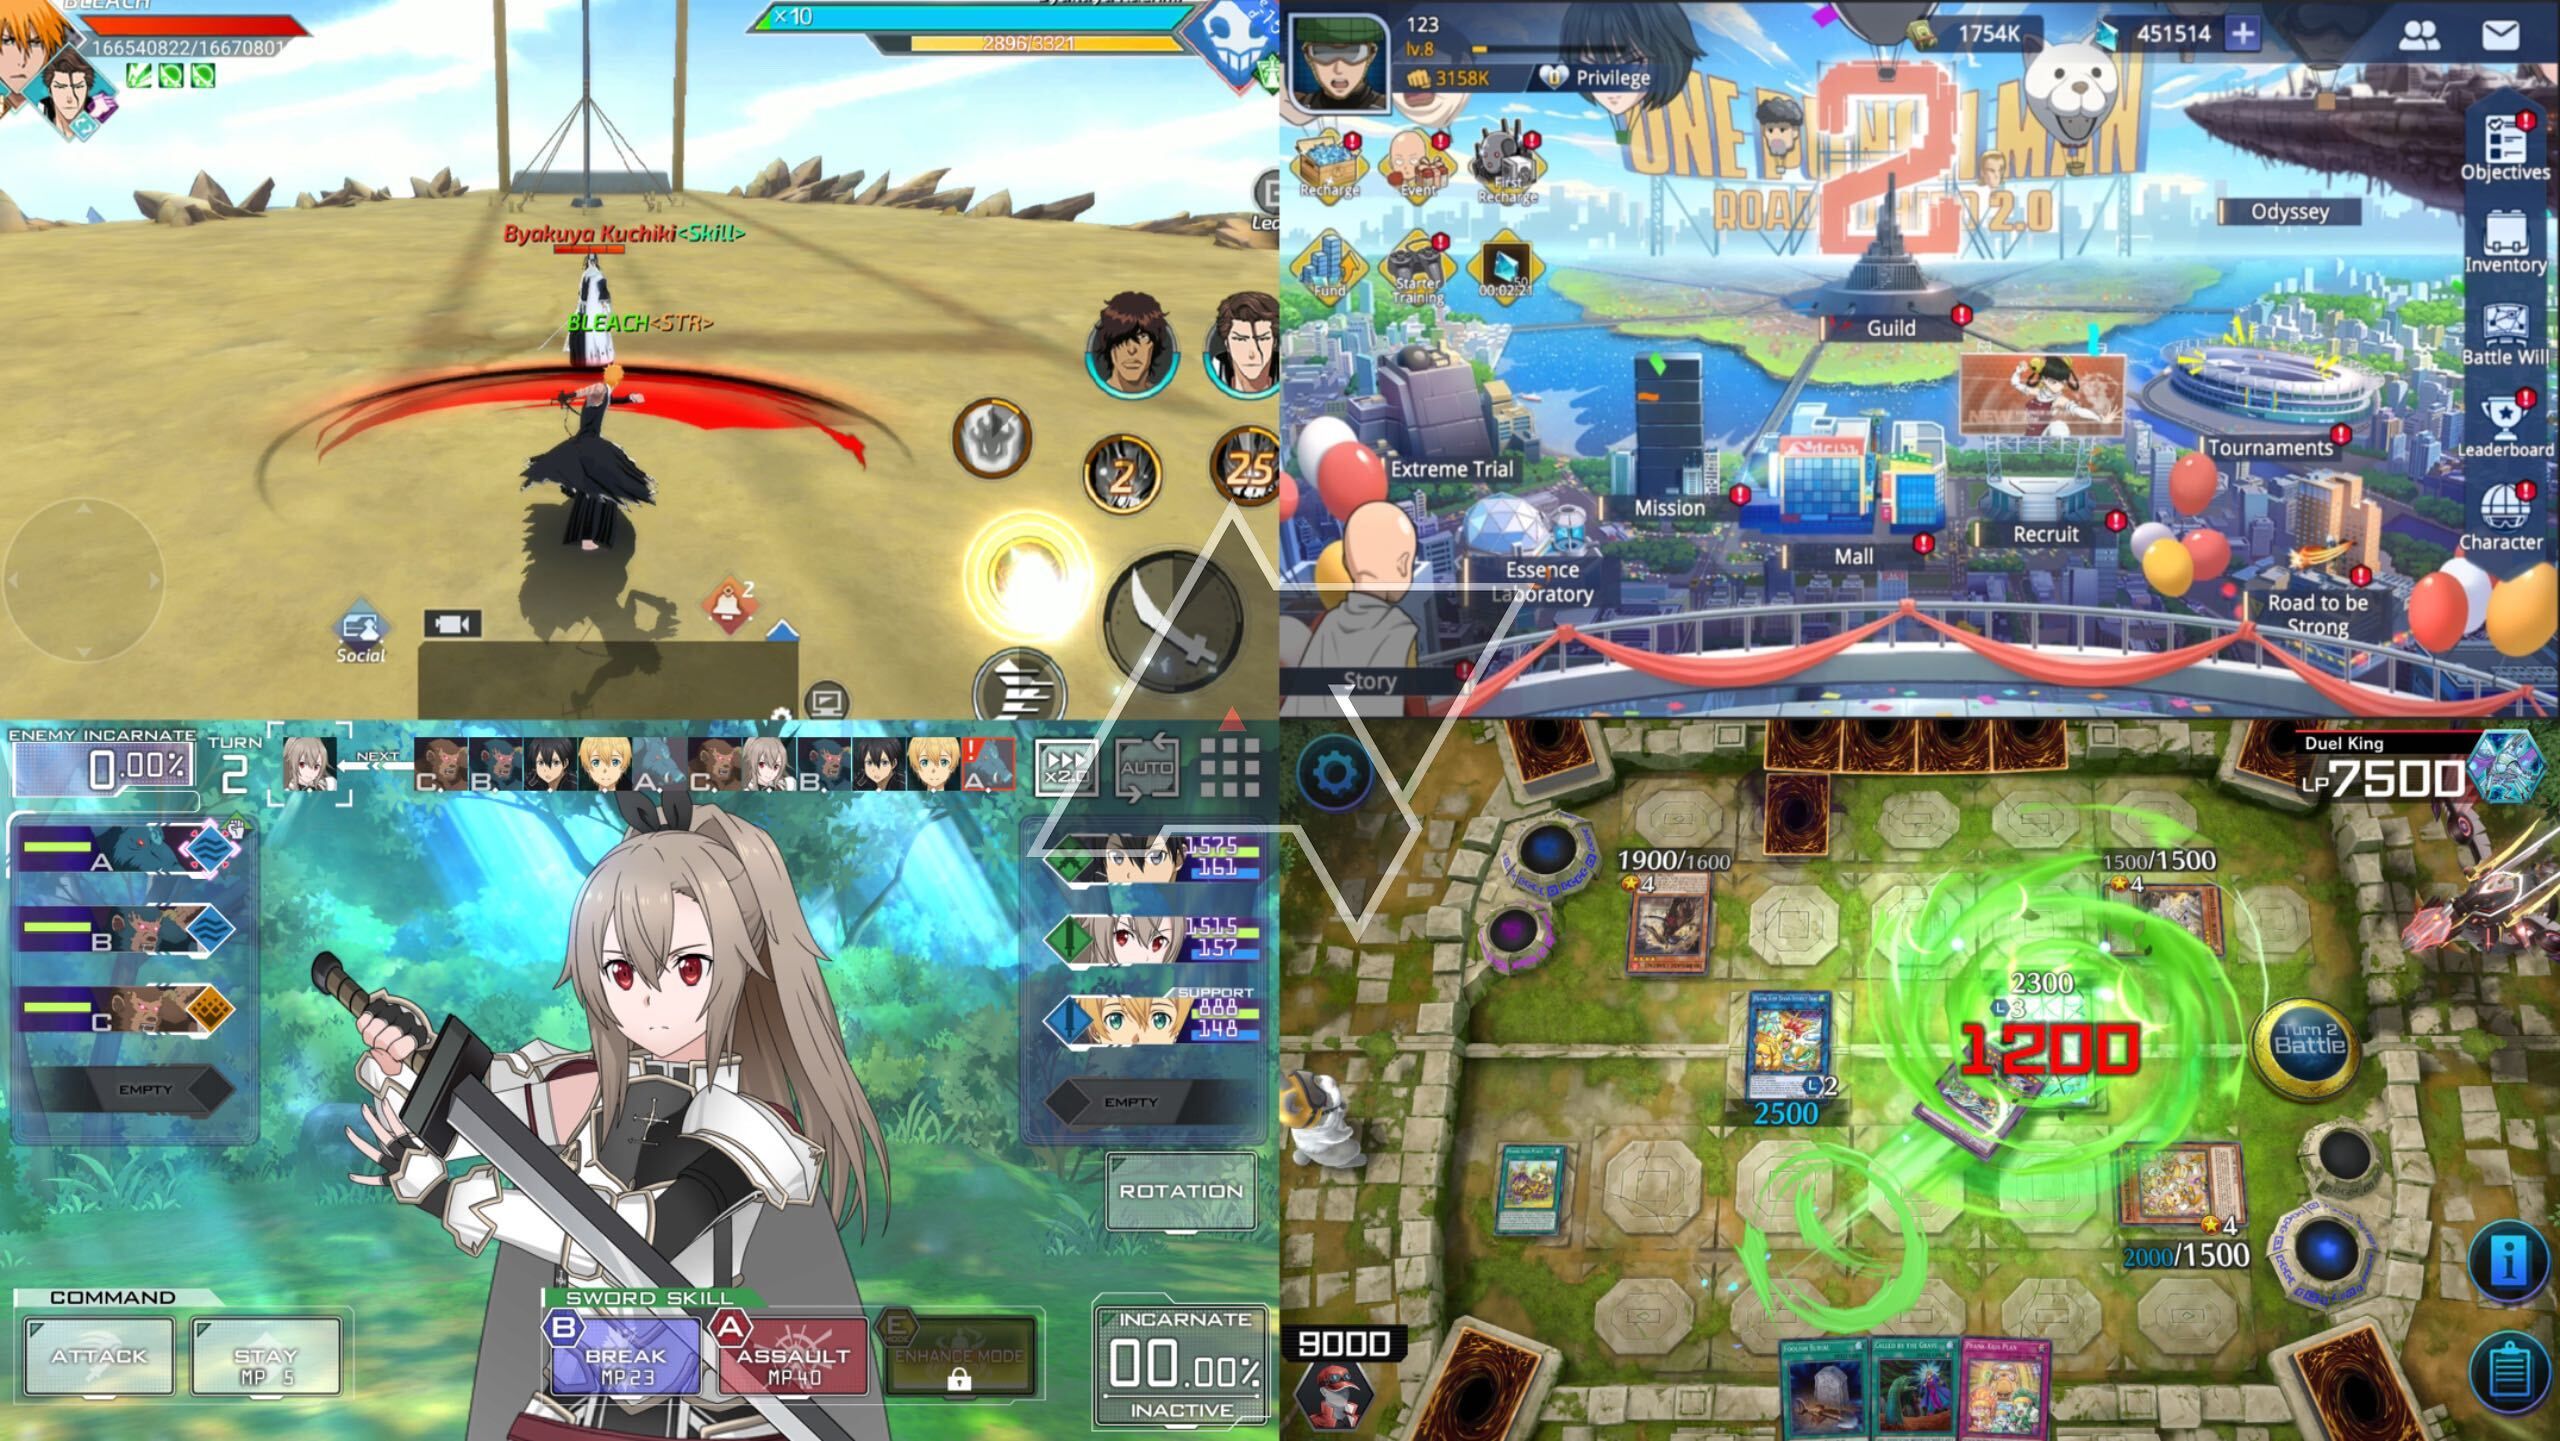 melhores-jogos-de-anime-android-collage-bleach-mobile-3d-one-punch-man-road-to-hero-2-0-sword-art-online-unleash-blading-yugioh-master-duel